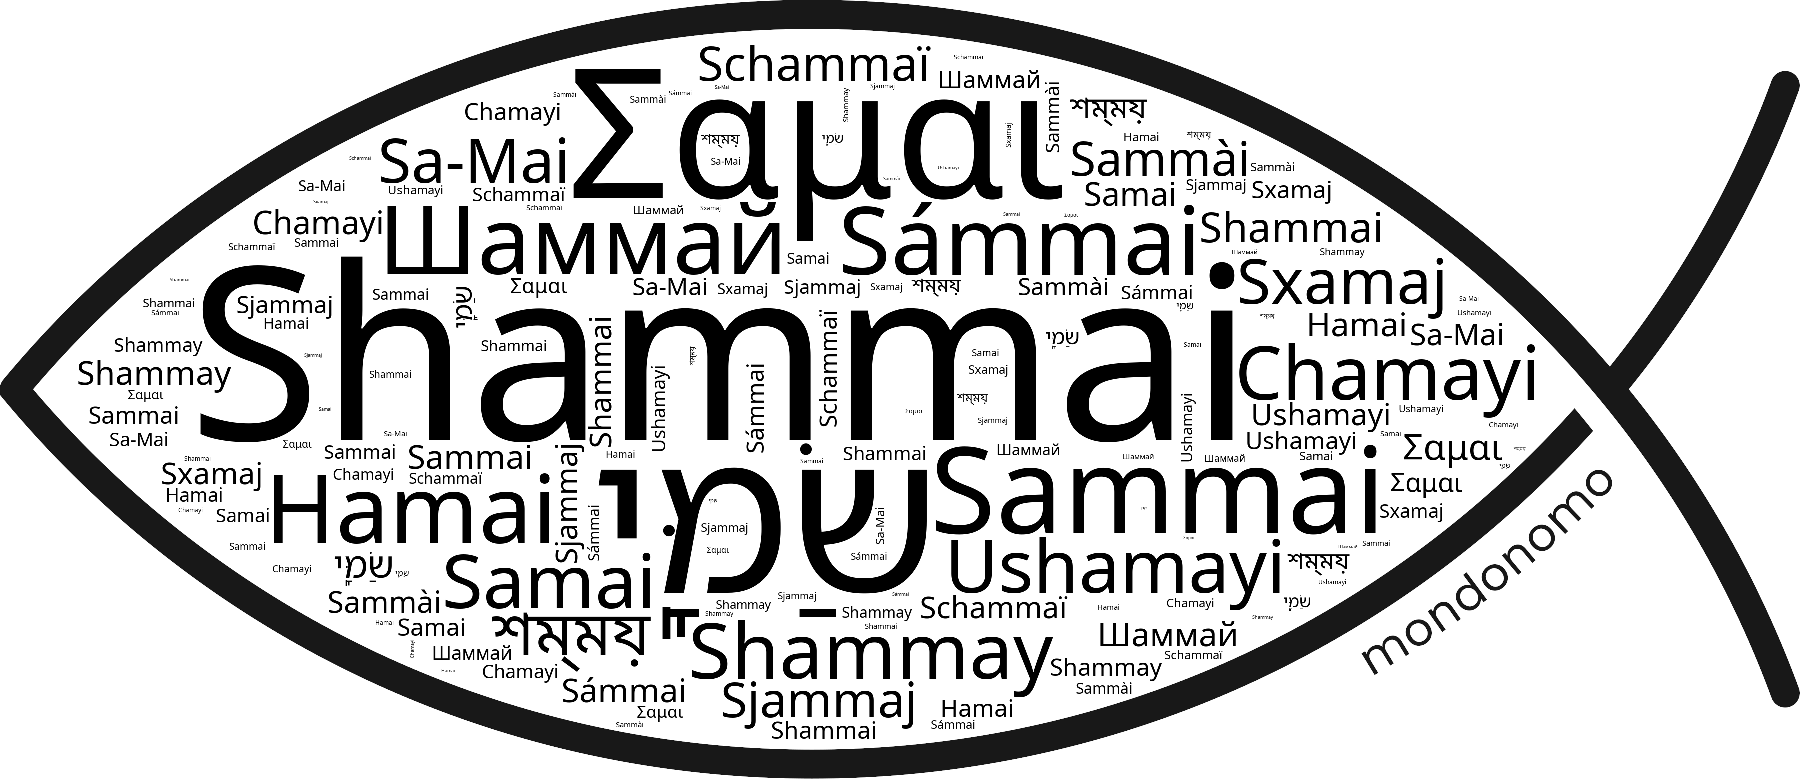 Name Shammai in the world's Bibles